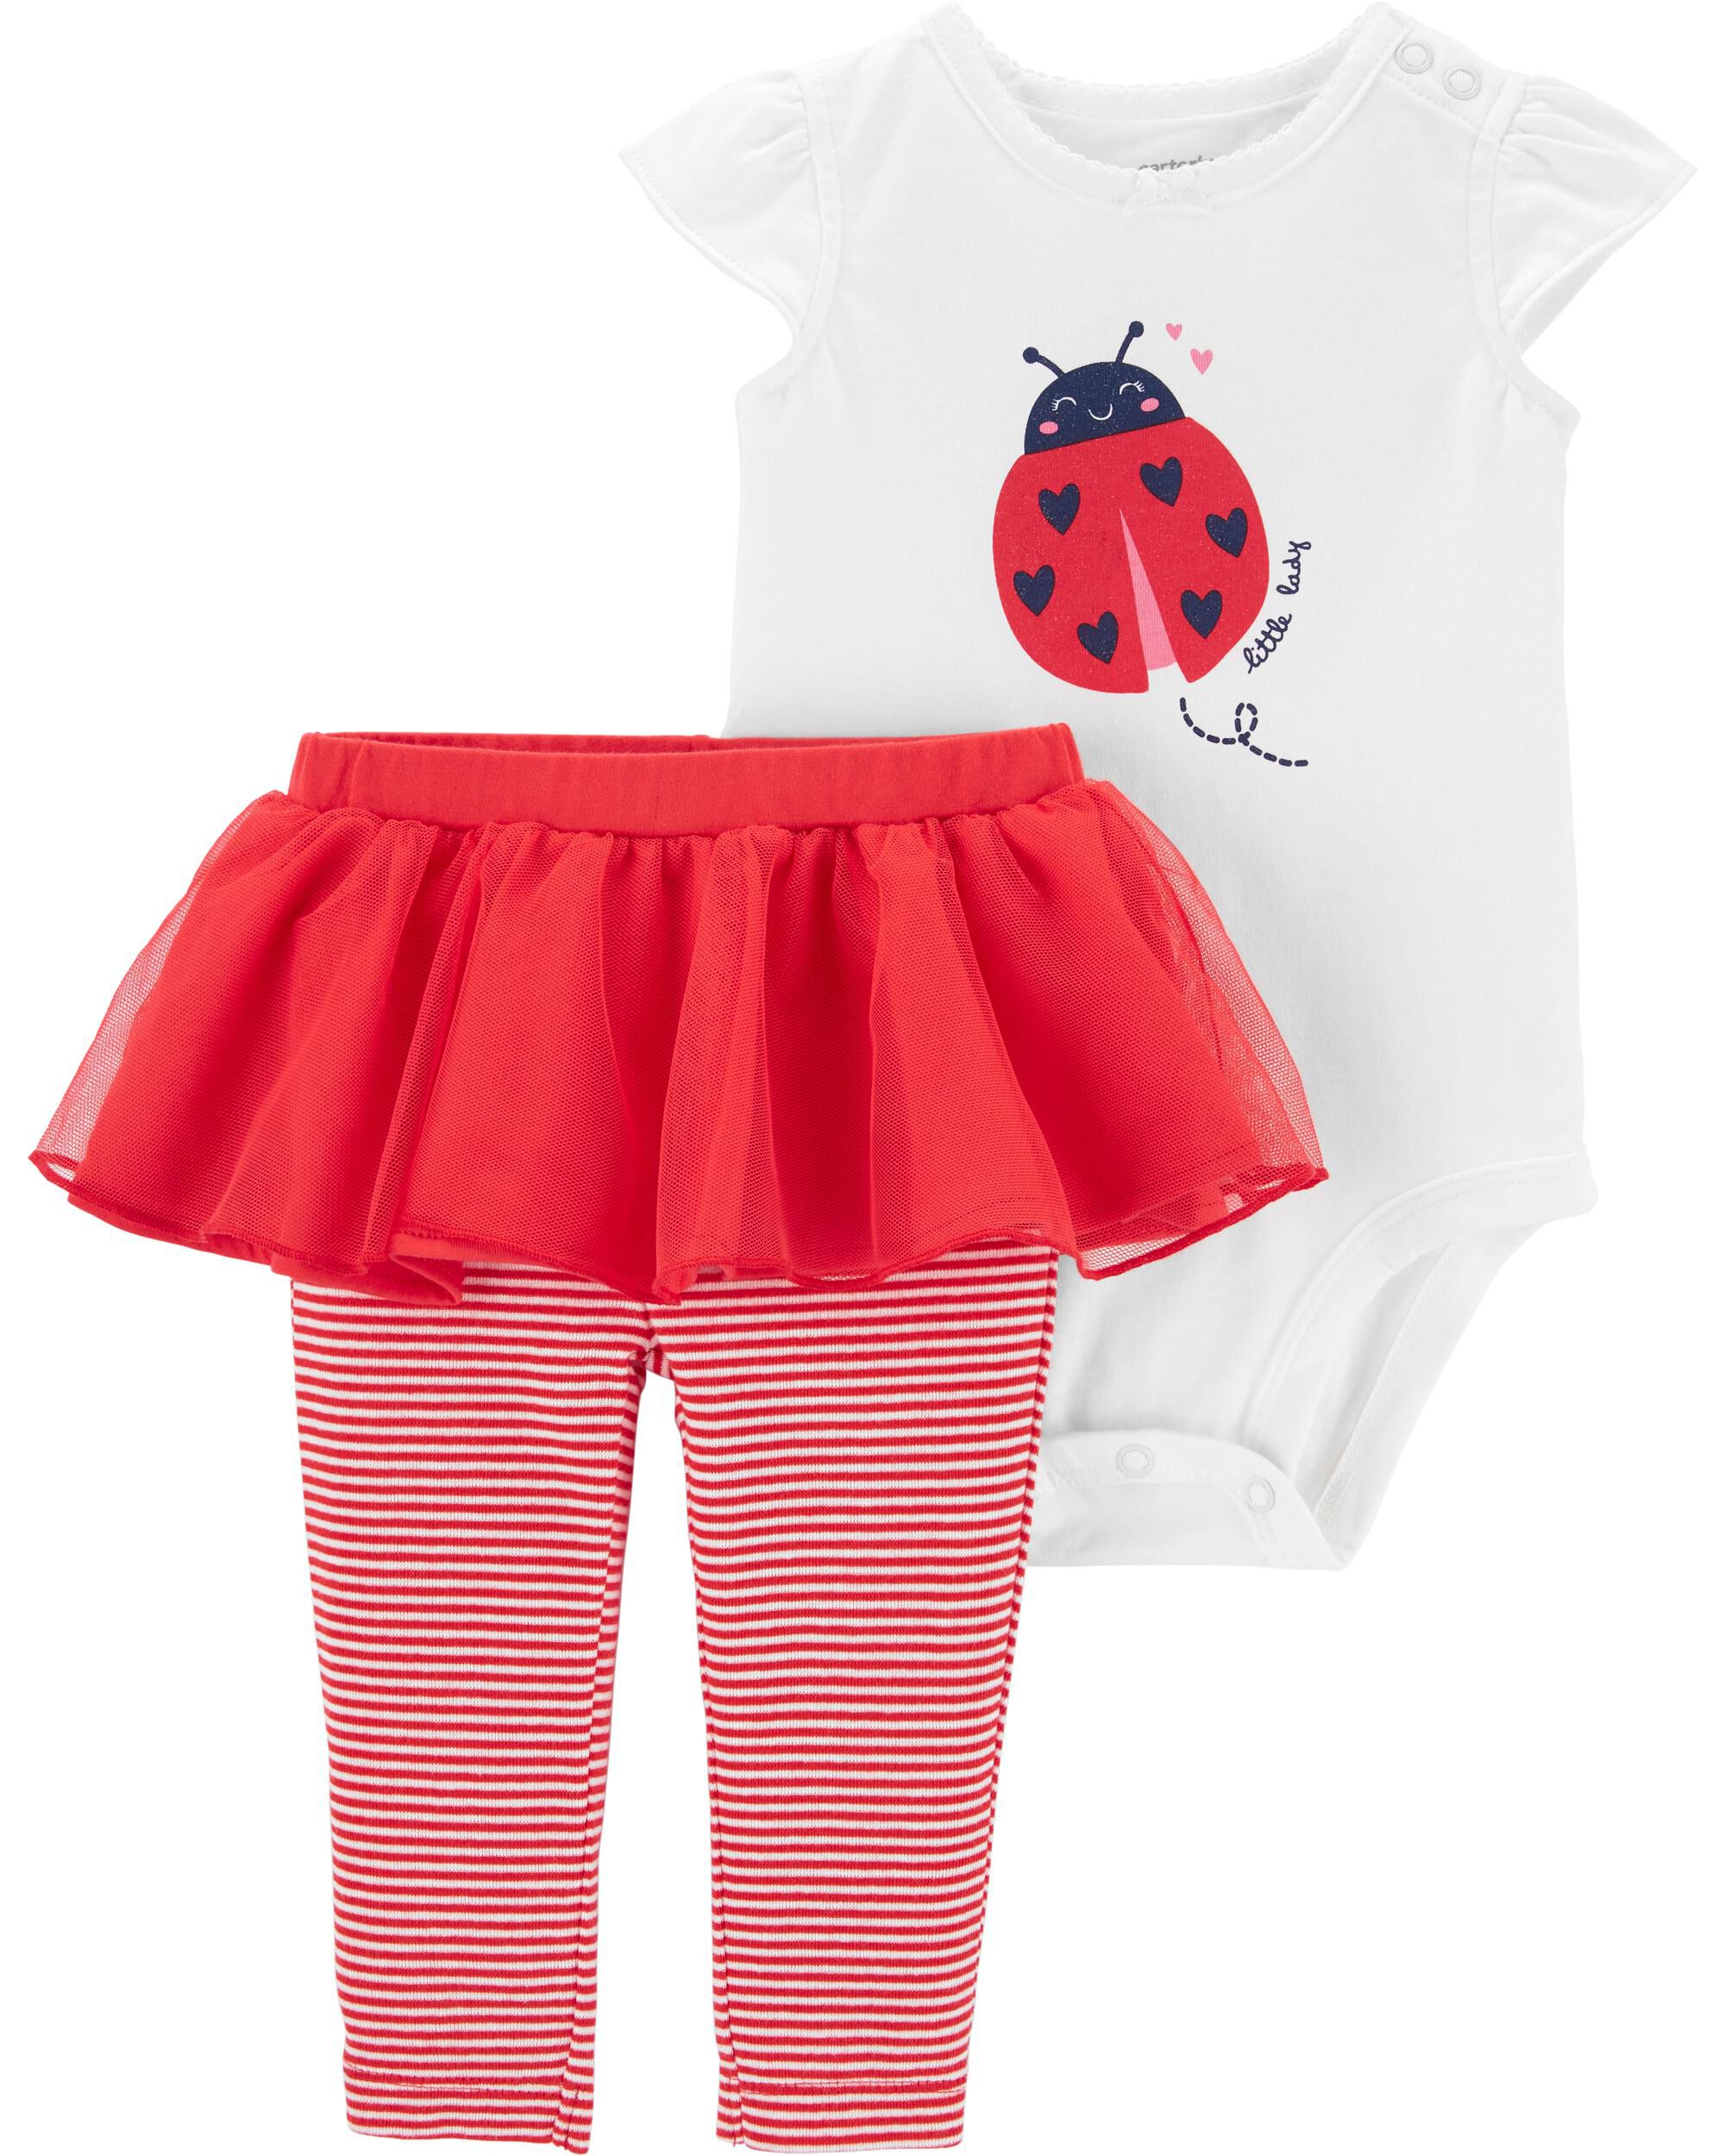 ladybug baby clothes